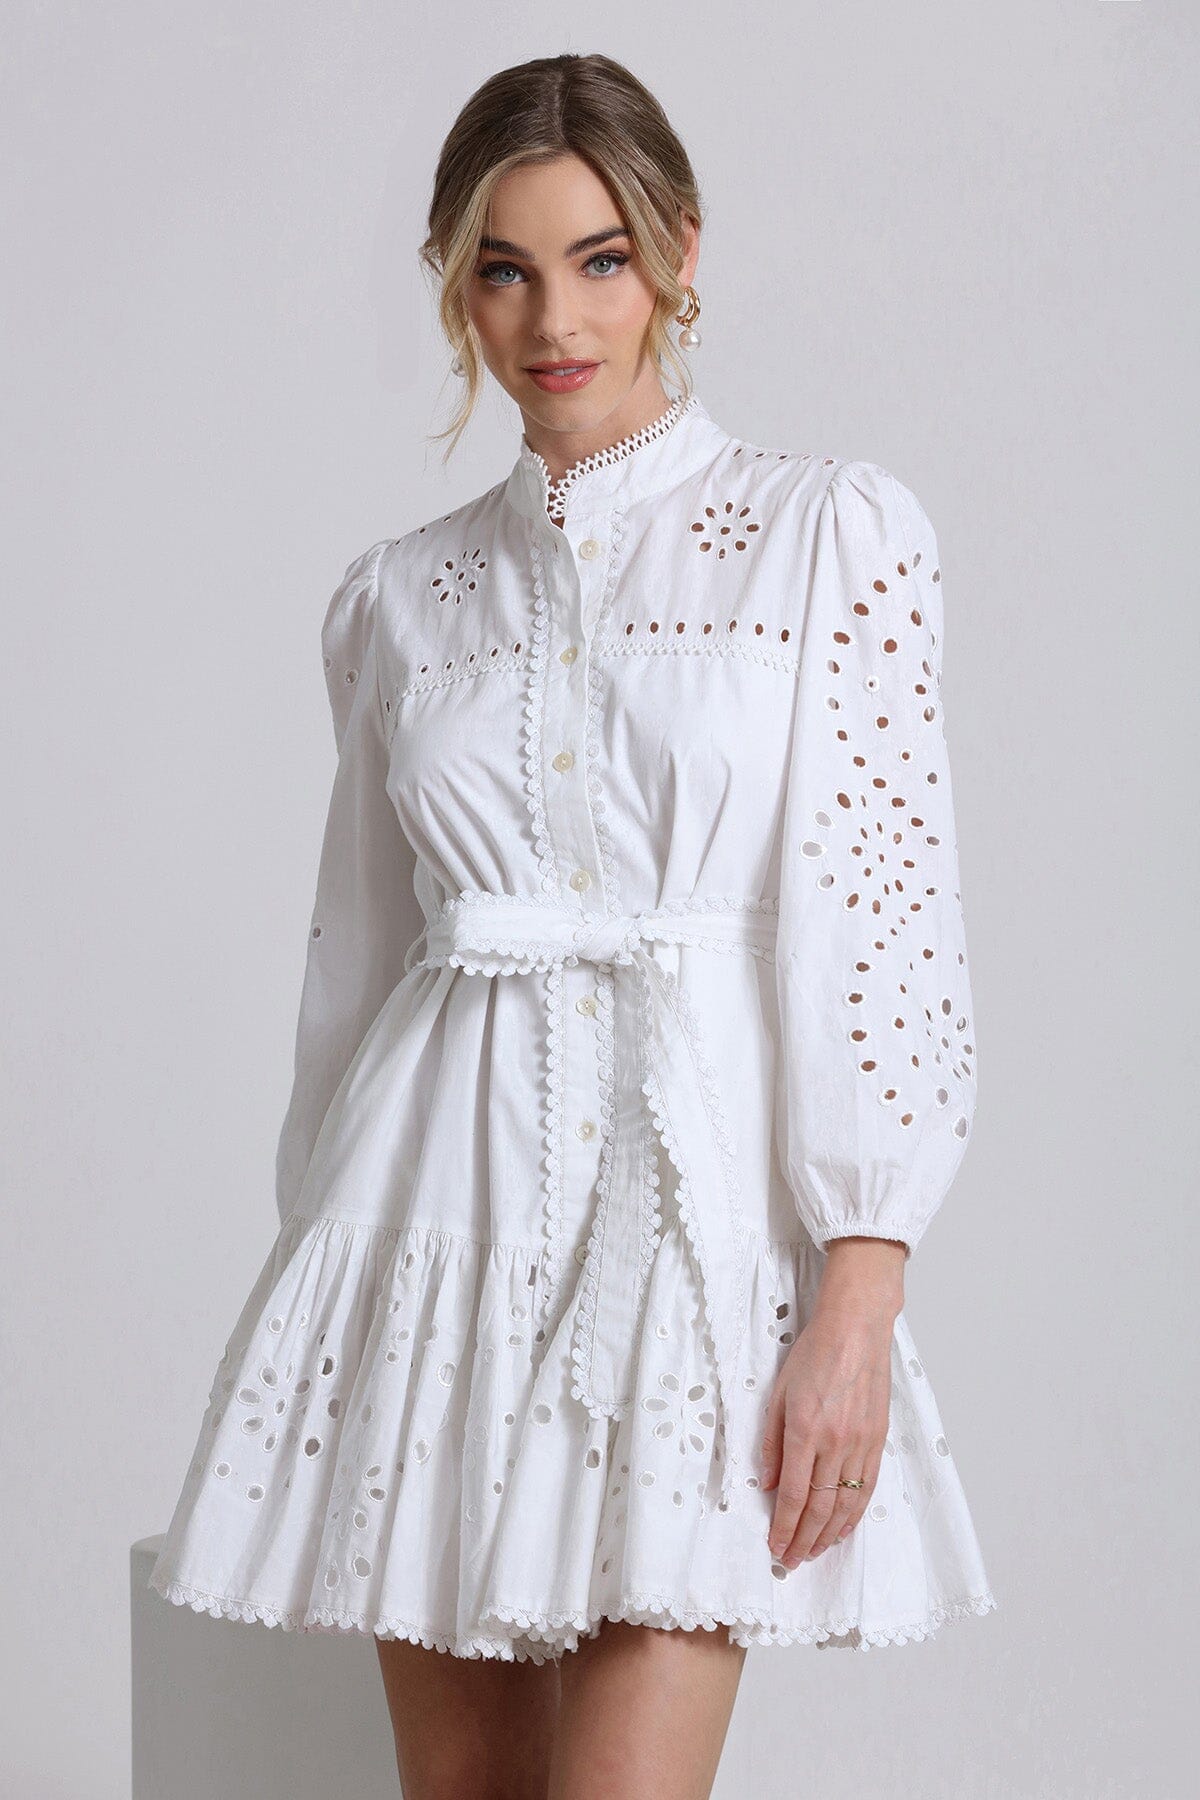 Broderie Anglaise Cotton Shirtdress Dresses Avec Les Filles White 2 